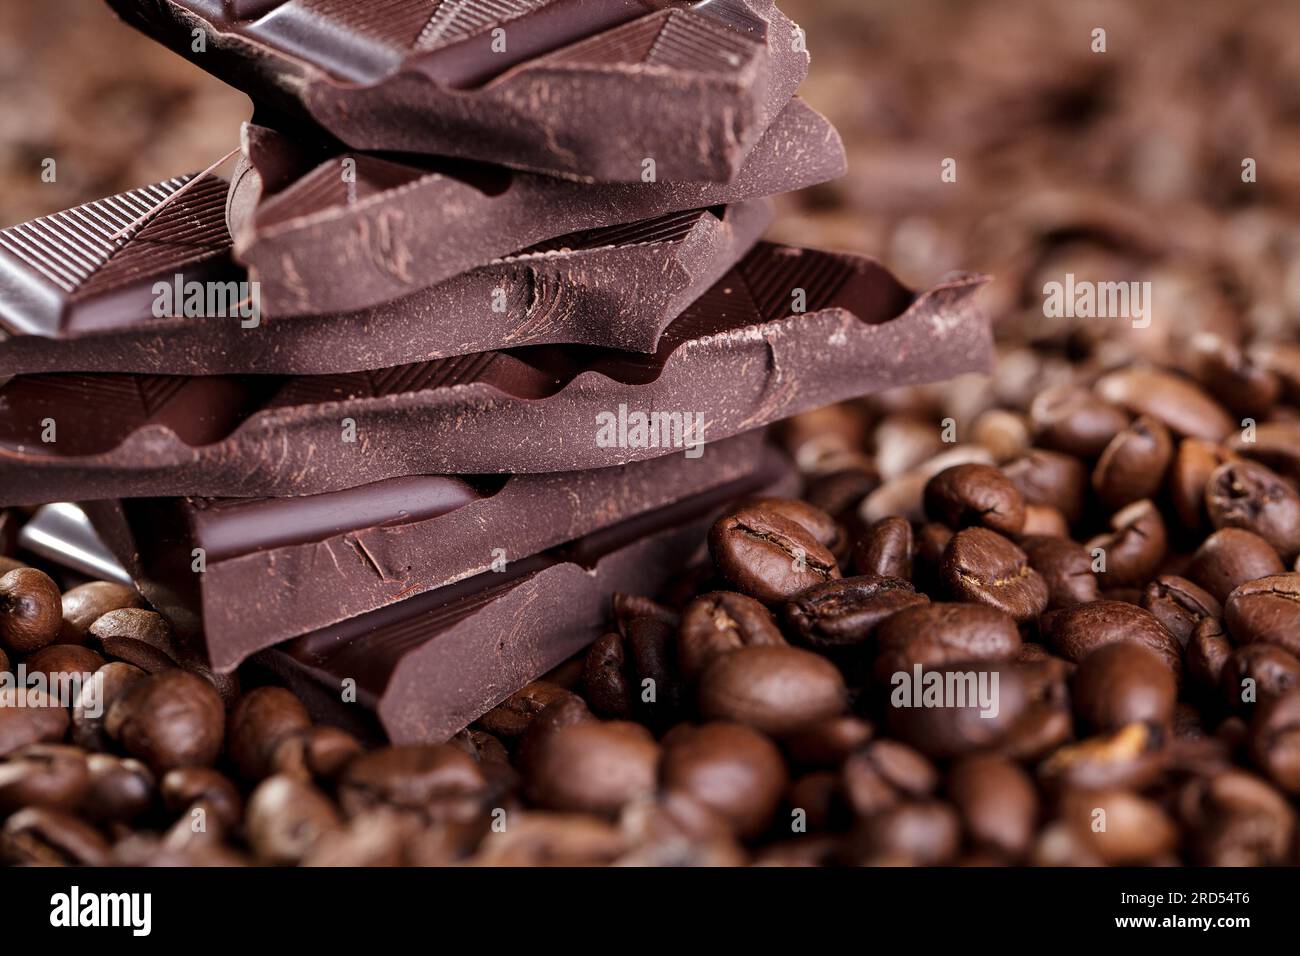 Dark chocolate bar and roasted coffee beans Stock Photo